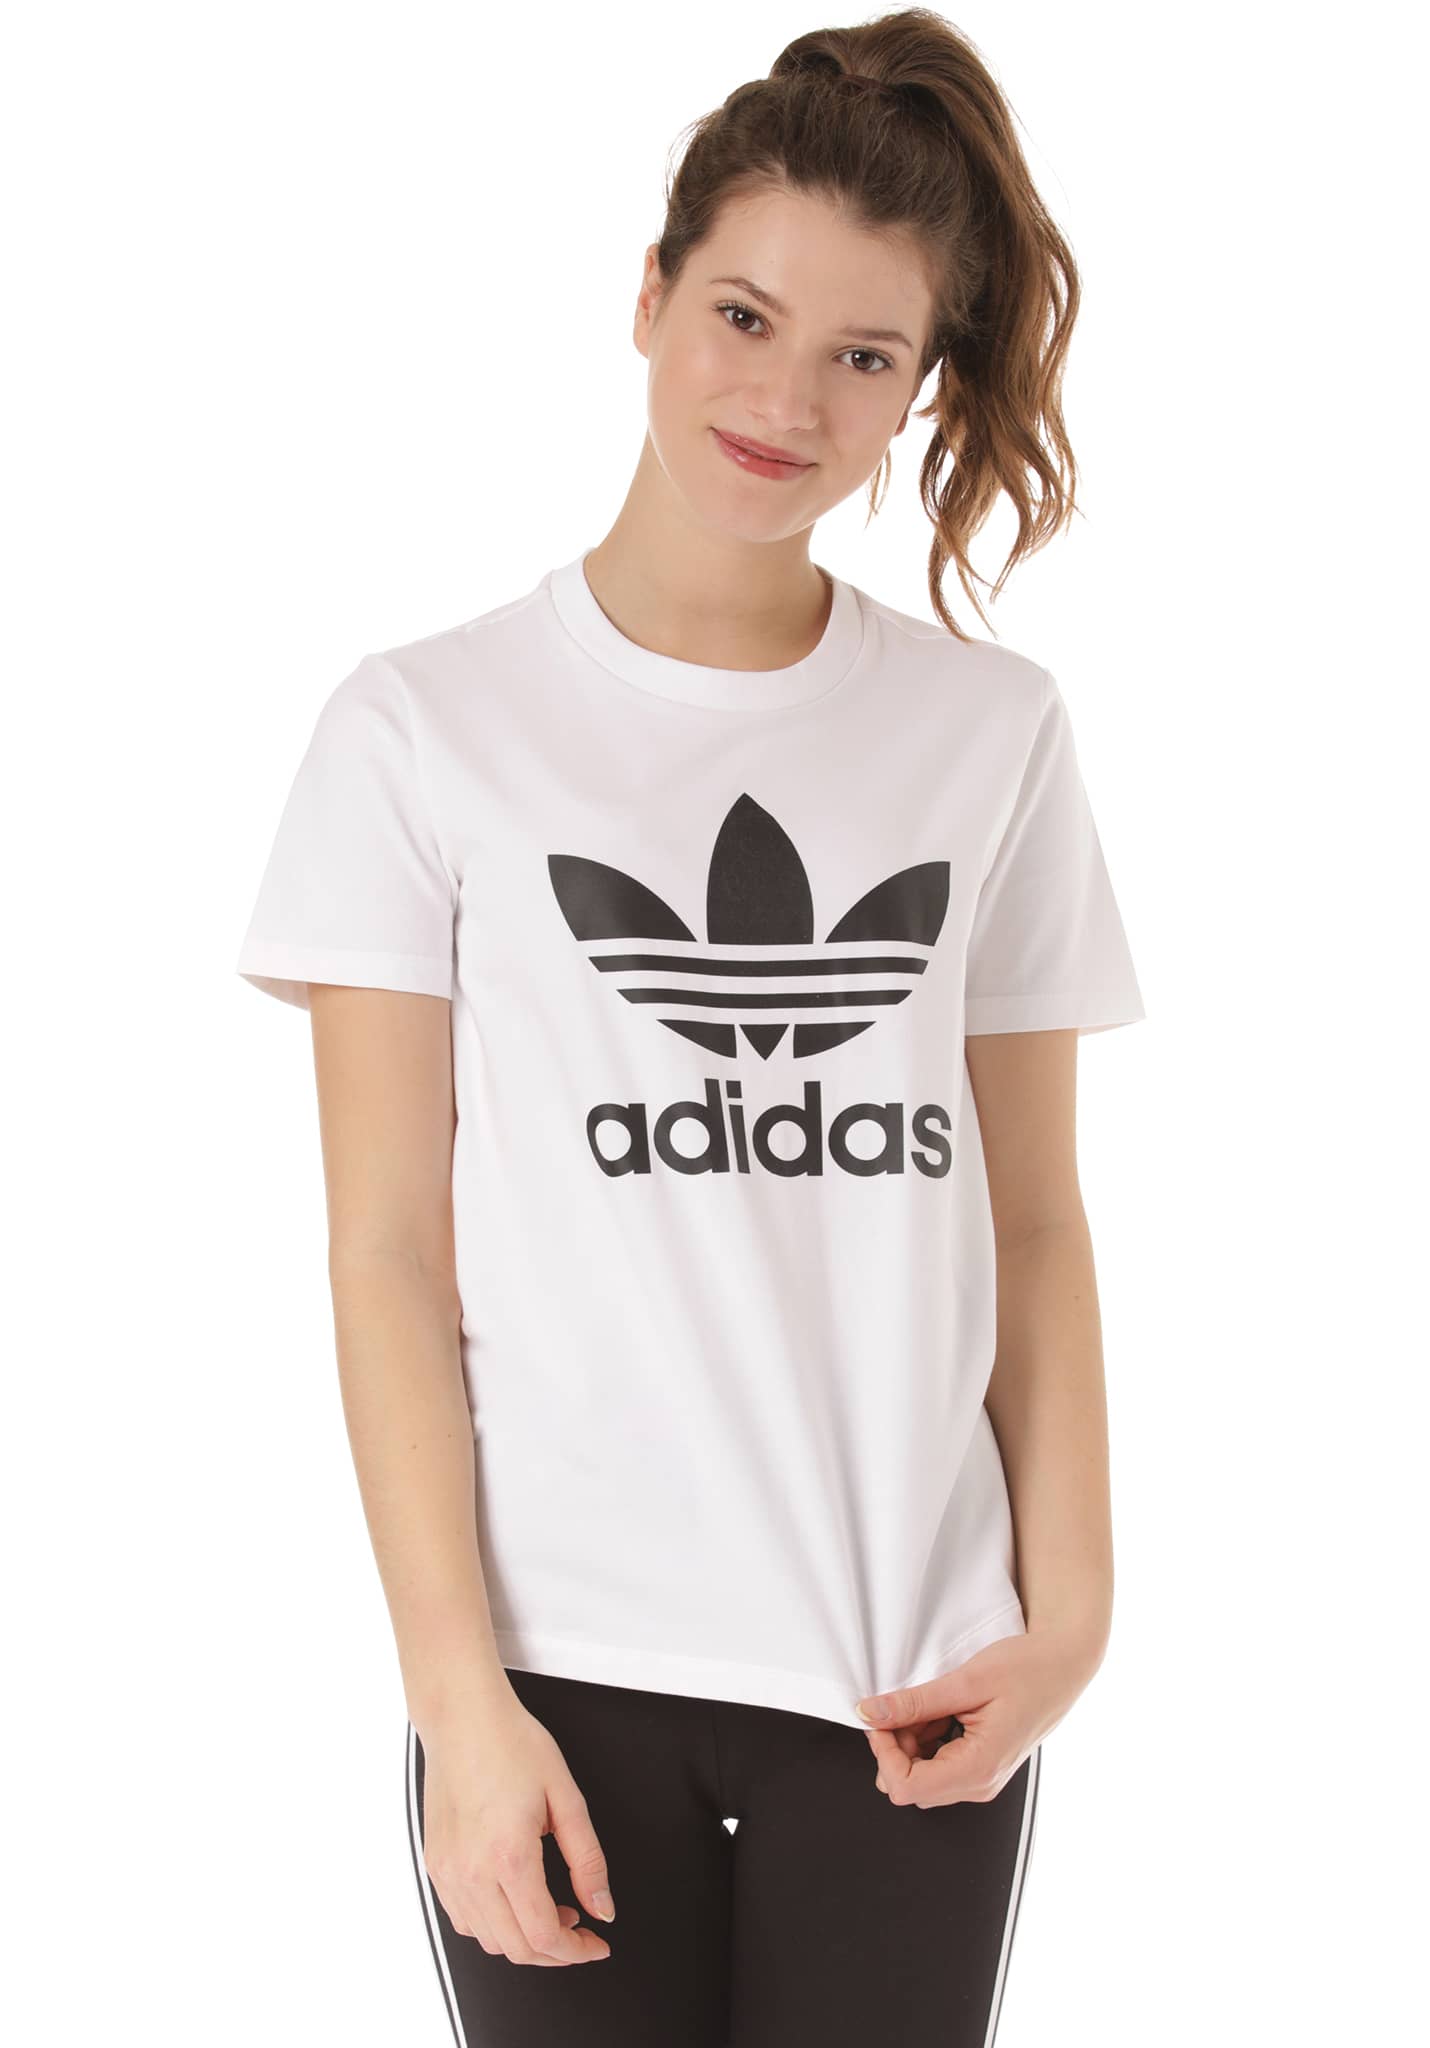 Adidas Originals Trefoil T-Shirt white 34